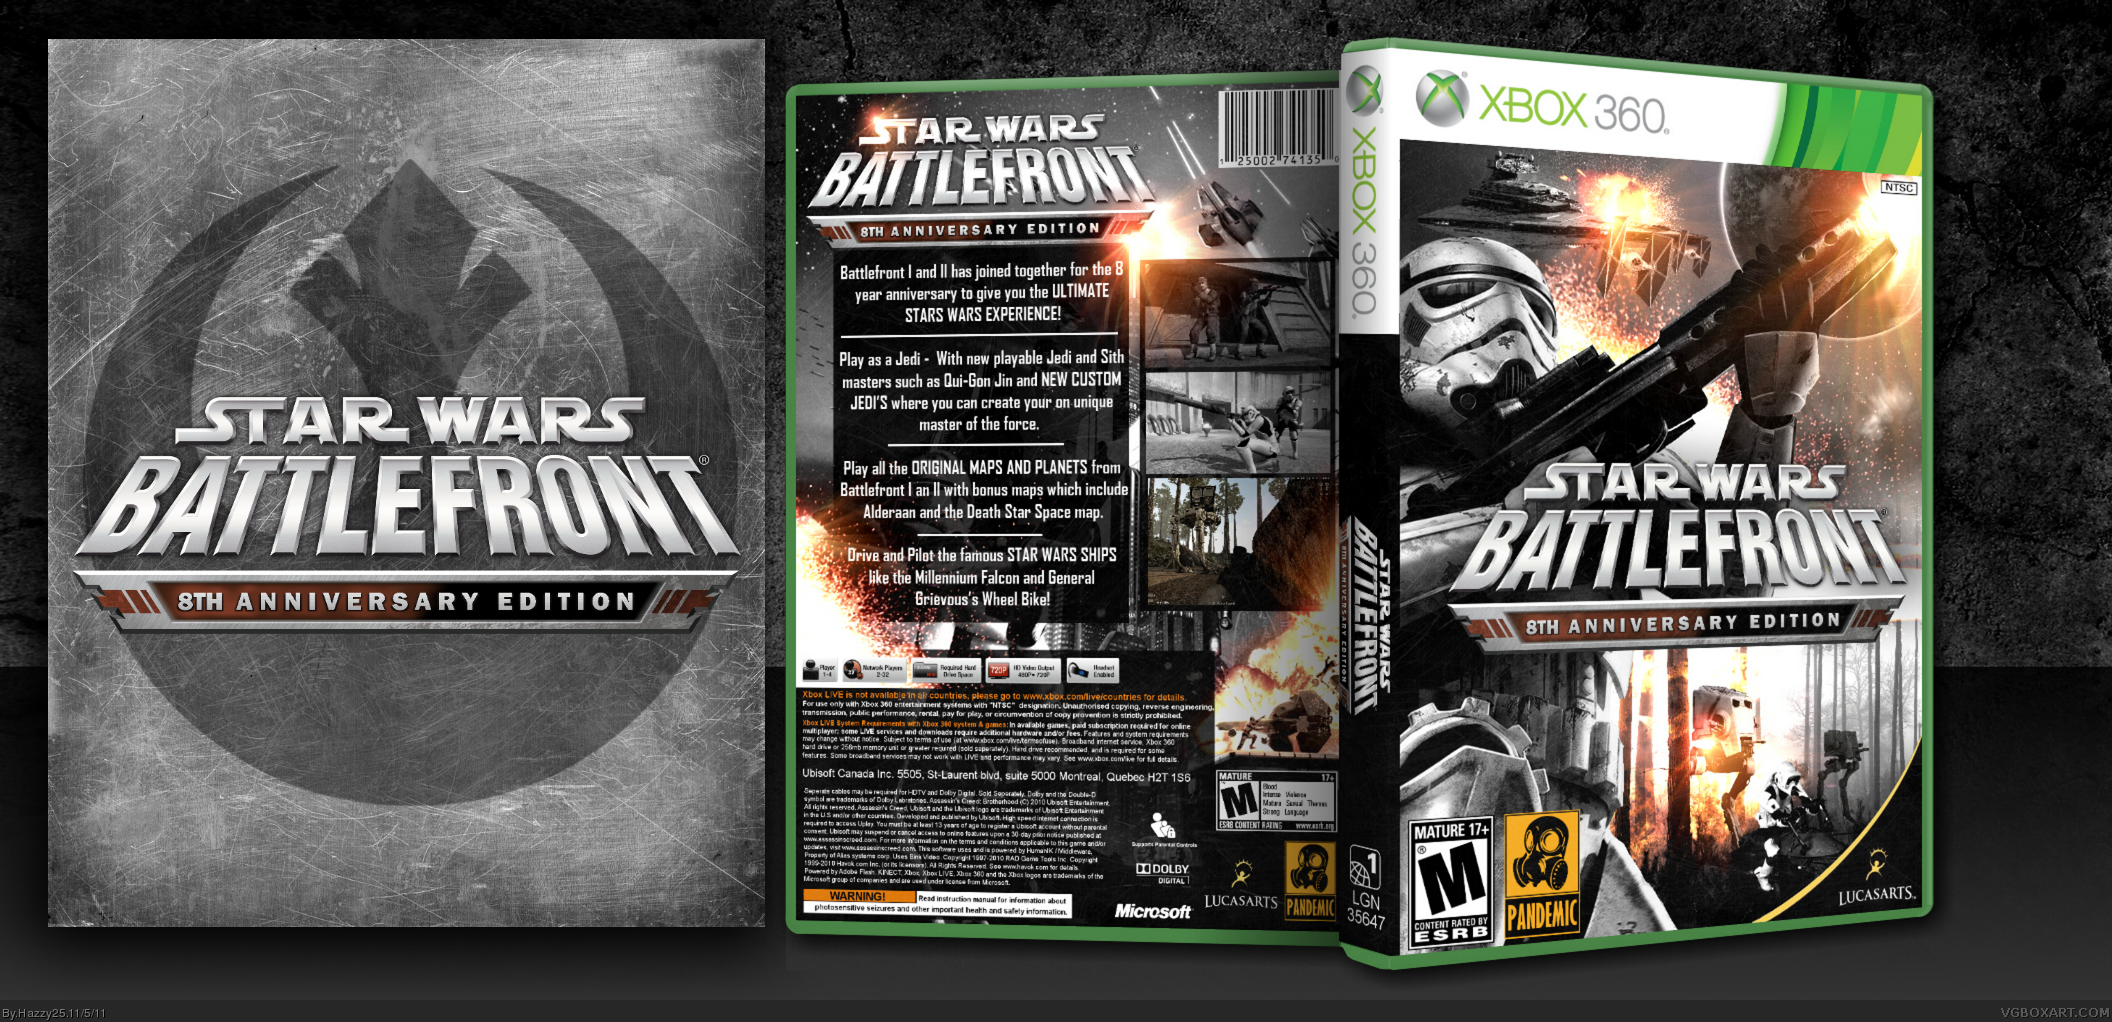 Star Wars Battlefront II box cover